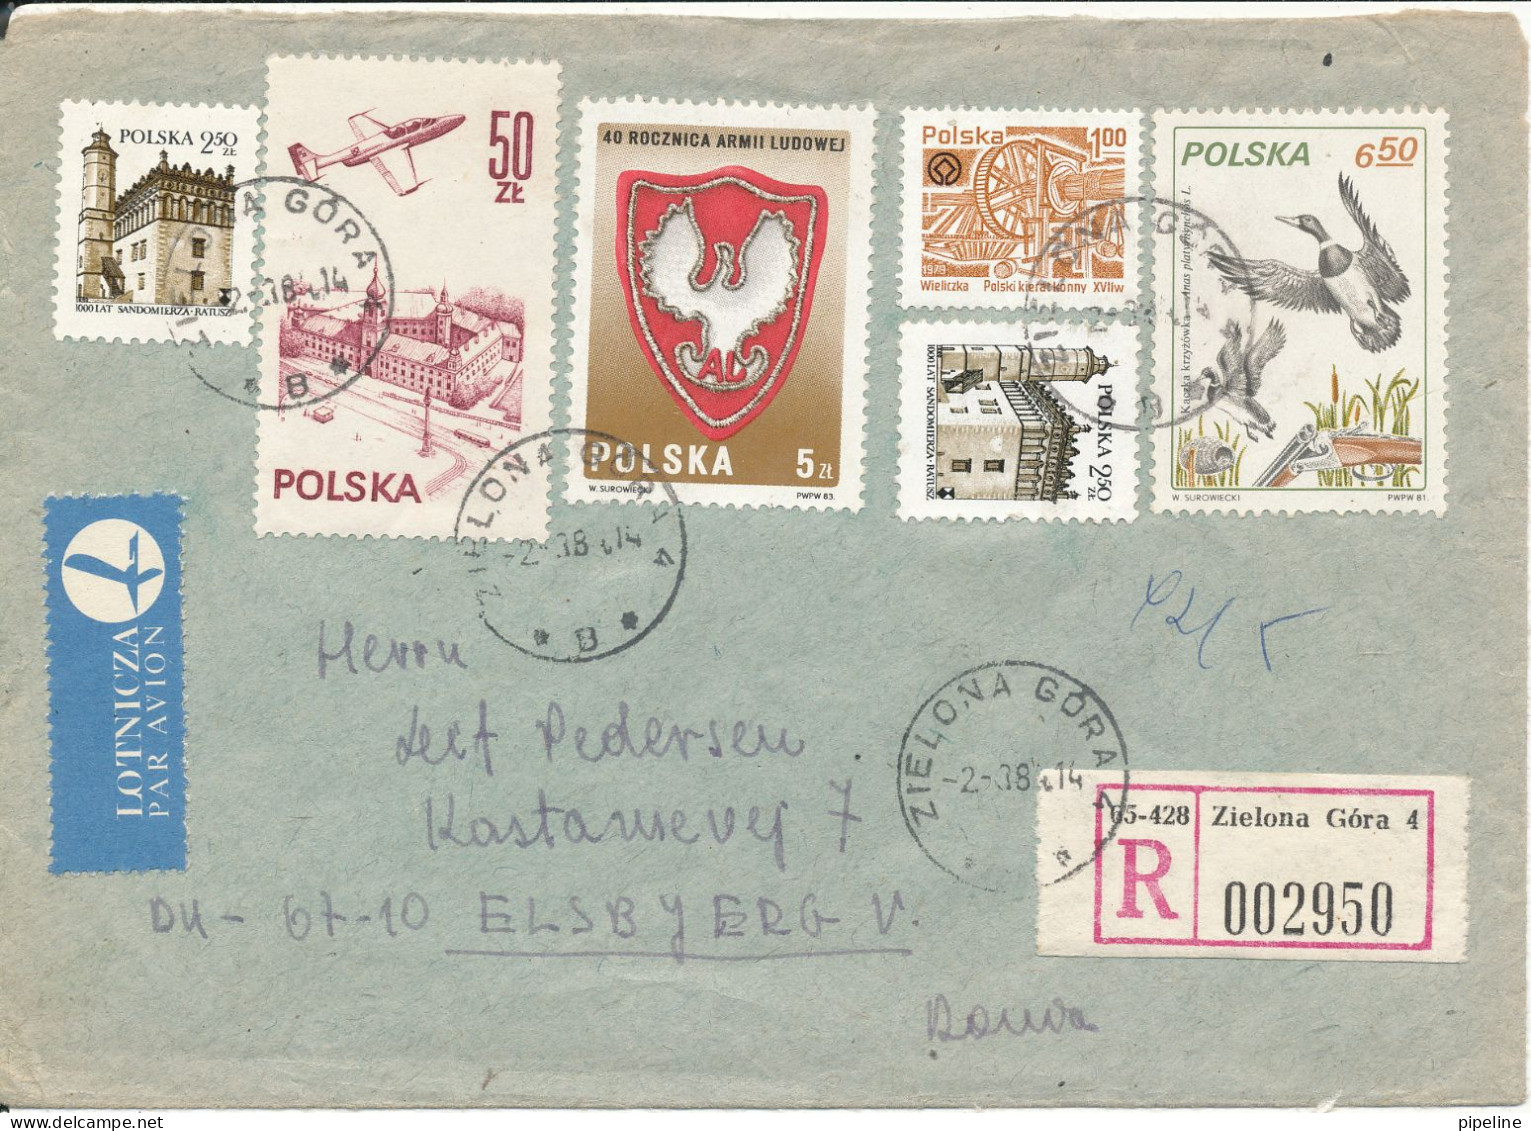 Poland Registered Cover Sent To Denmark Zielona Gora 2-3-1984 With More Topic Stamps - Briefe U. Dokumente